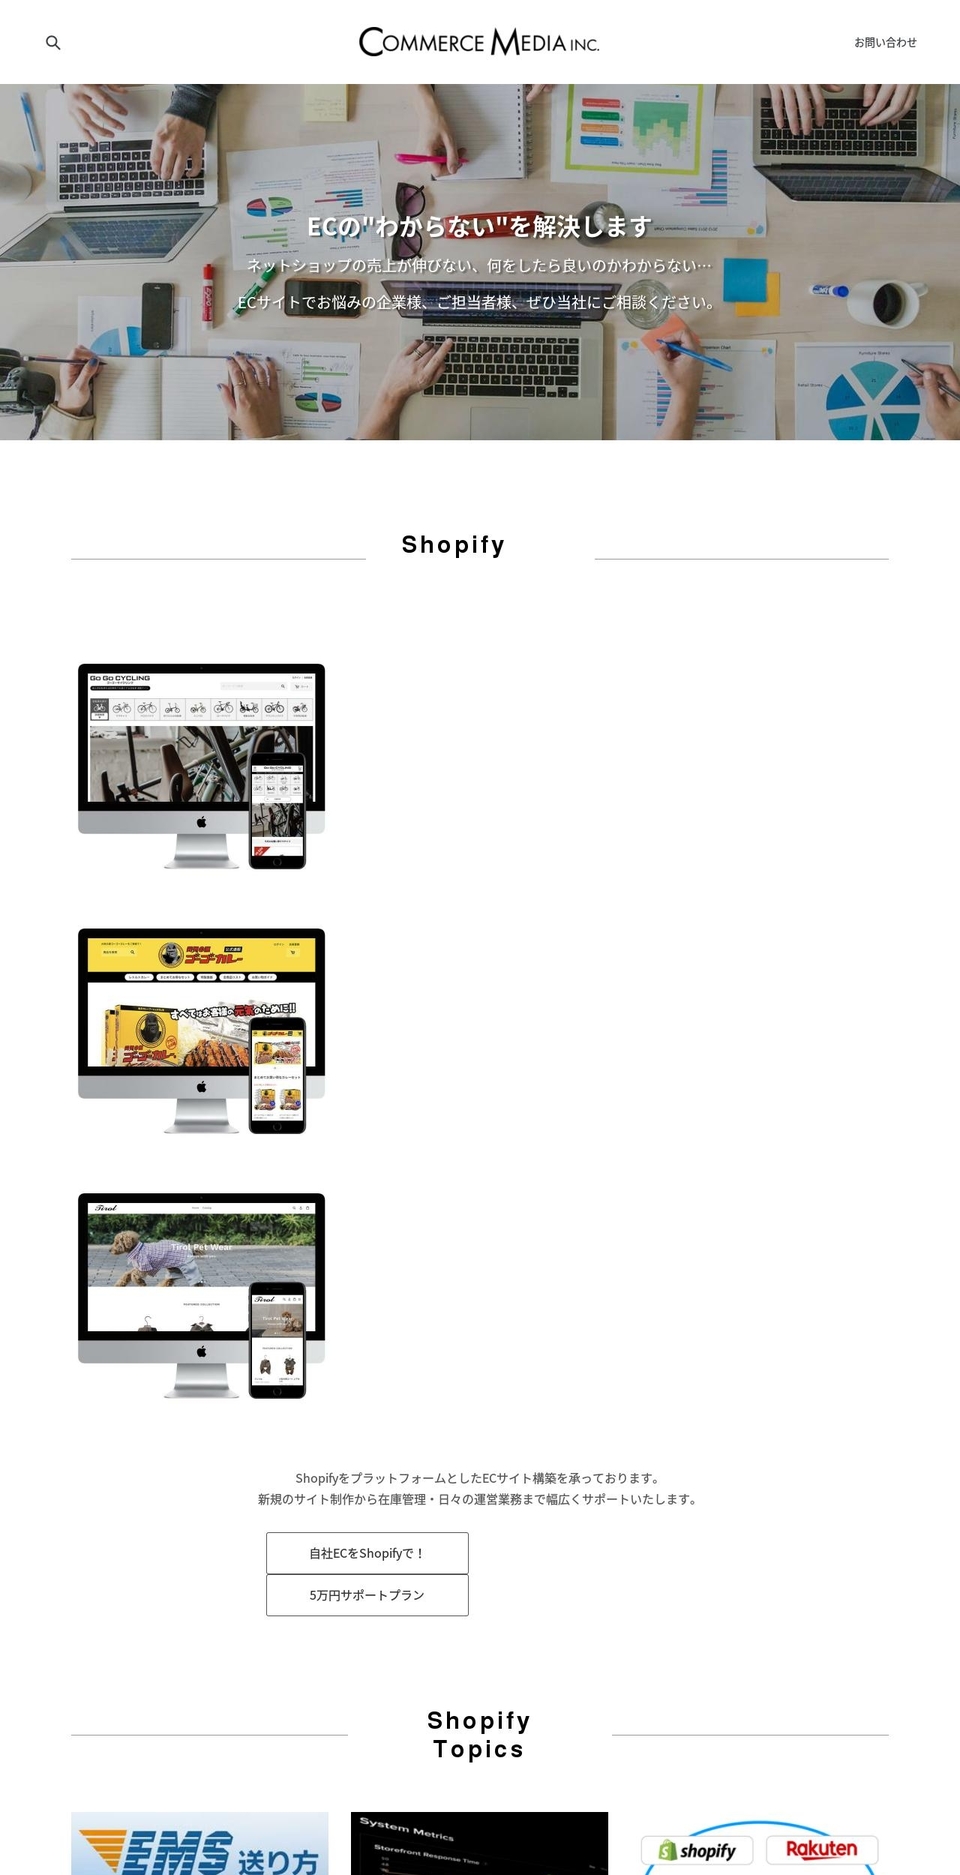 commerce-media.info shopify website screenshot